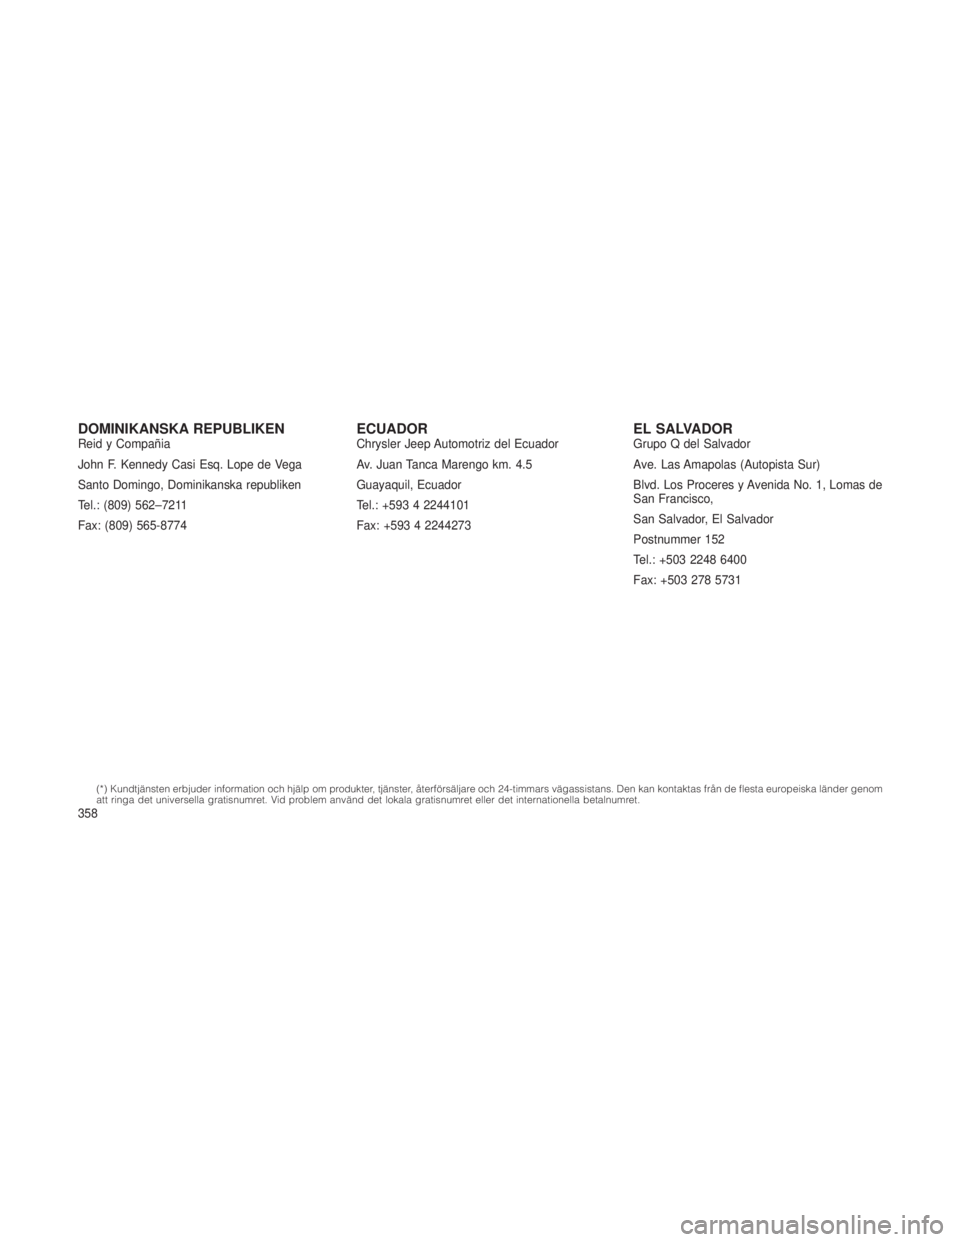 JEEP GRAND CHEROKEE 2015  Drift- och underhållshandbok (in Swedish) DOMINIKANSKA REPUBLIKENReid y Compañia
John F. Kennedy Casi Esq. Lope de Vega
Santo Domingo, Dominikanska republiken
Tel.: (809) 562–7211
Fax: (809) 565-8774ECUADORChrysler Jeep Automotriz del Ecua